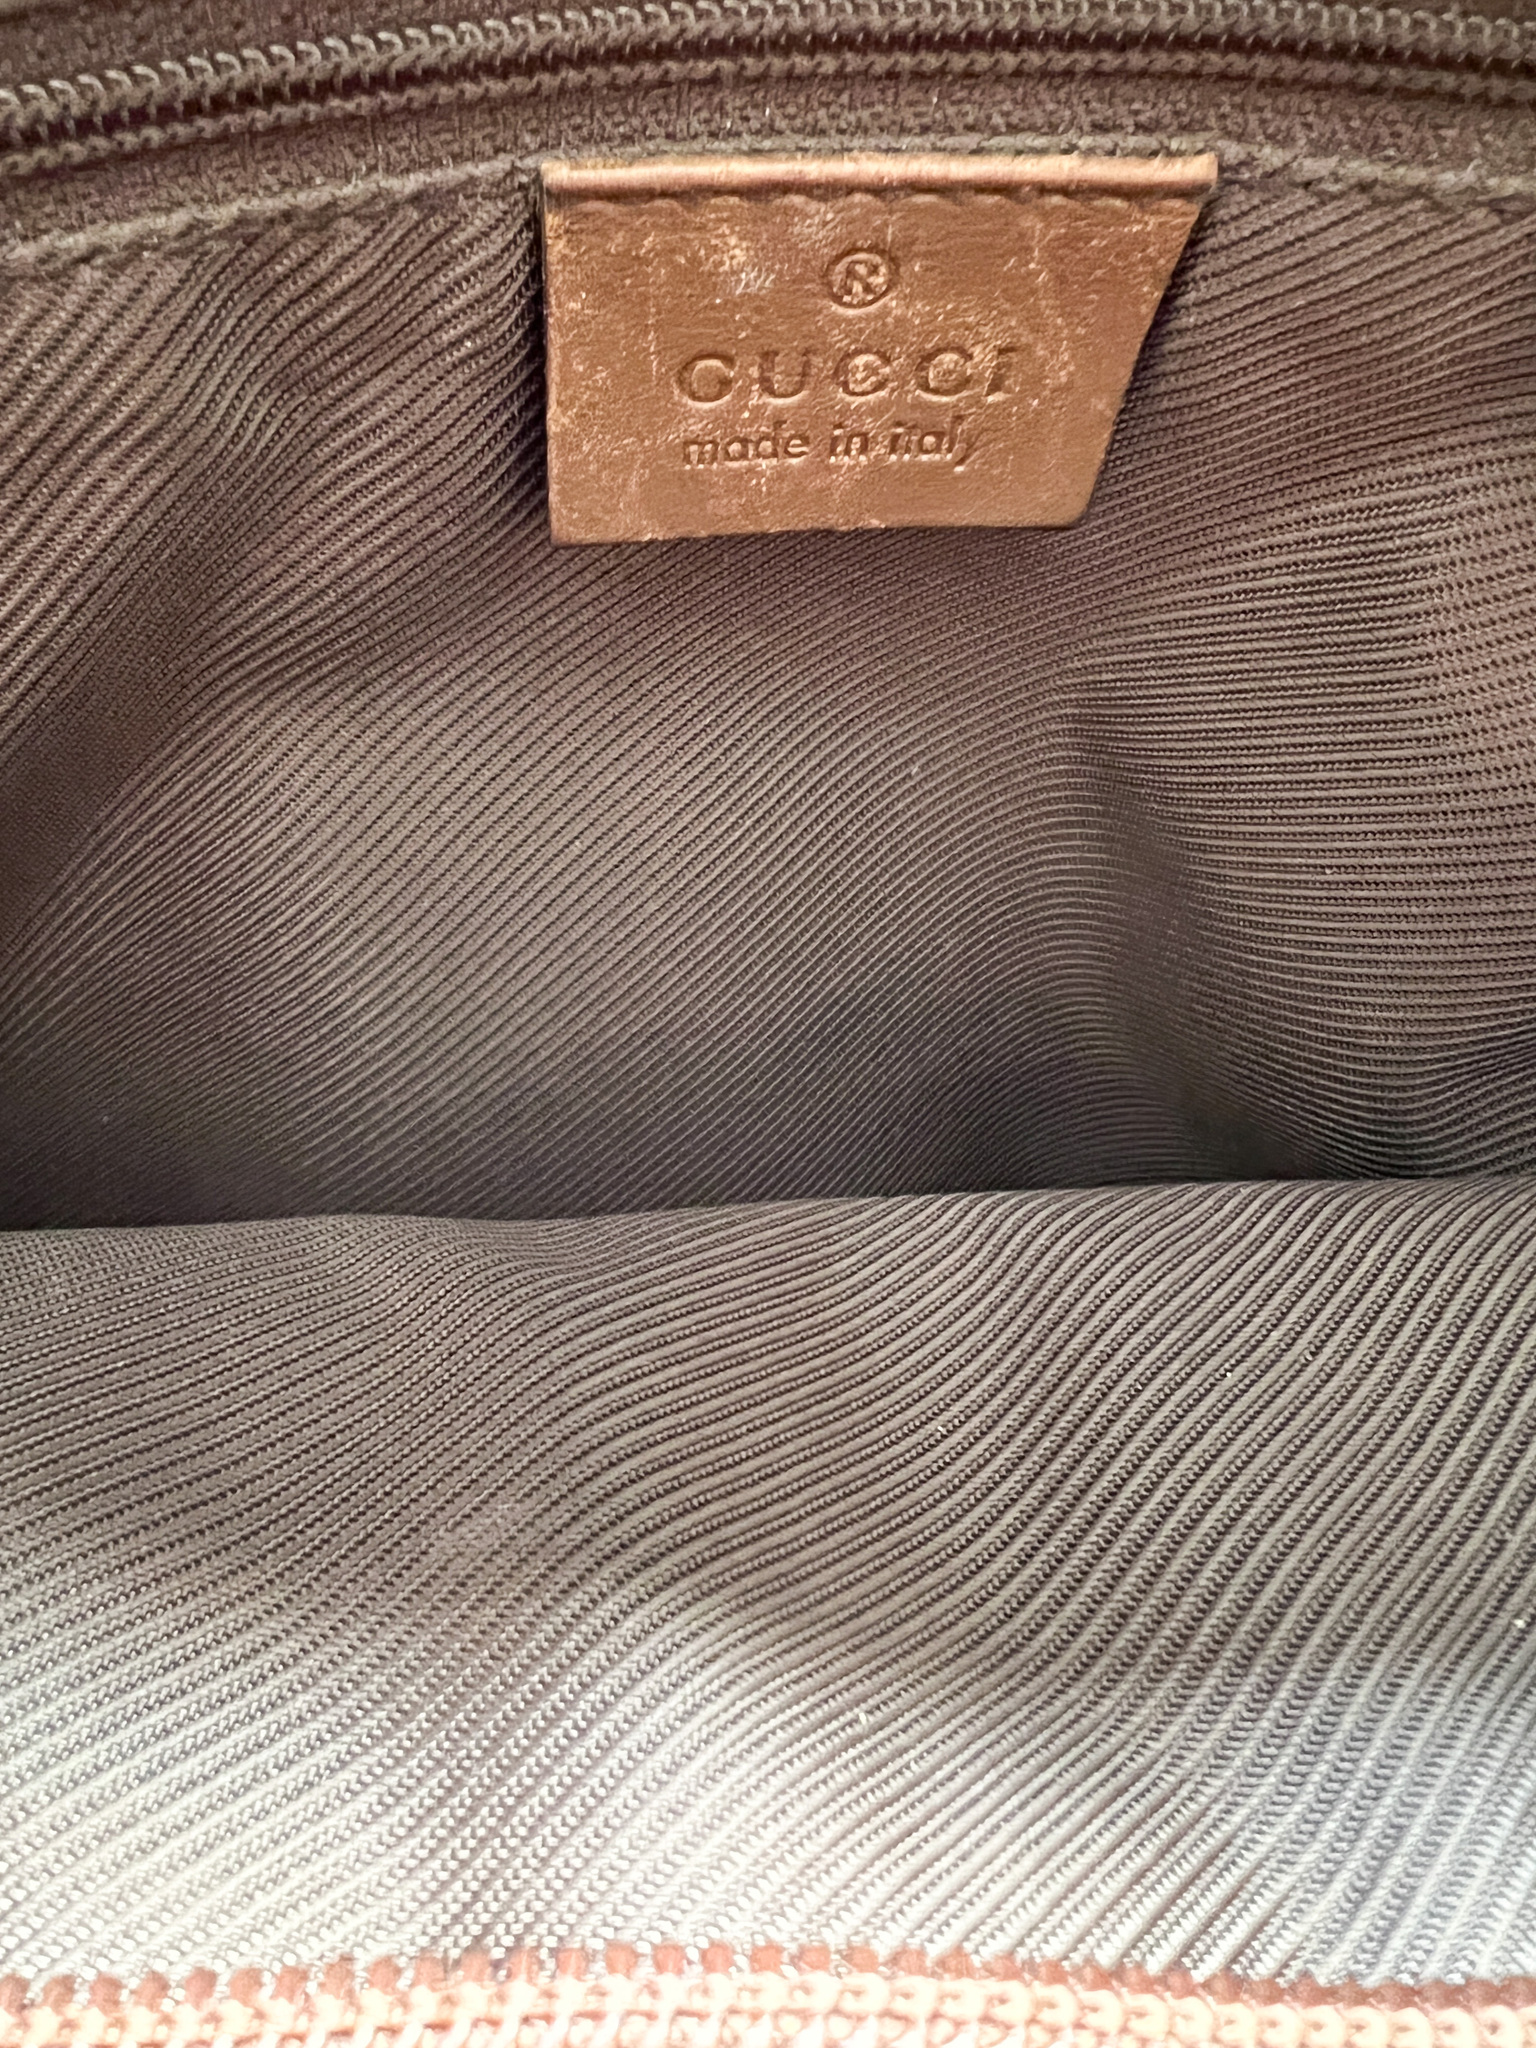 GUCCI Vintage Monogram Bag